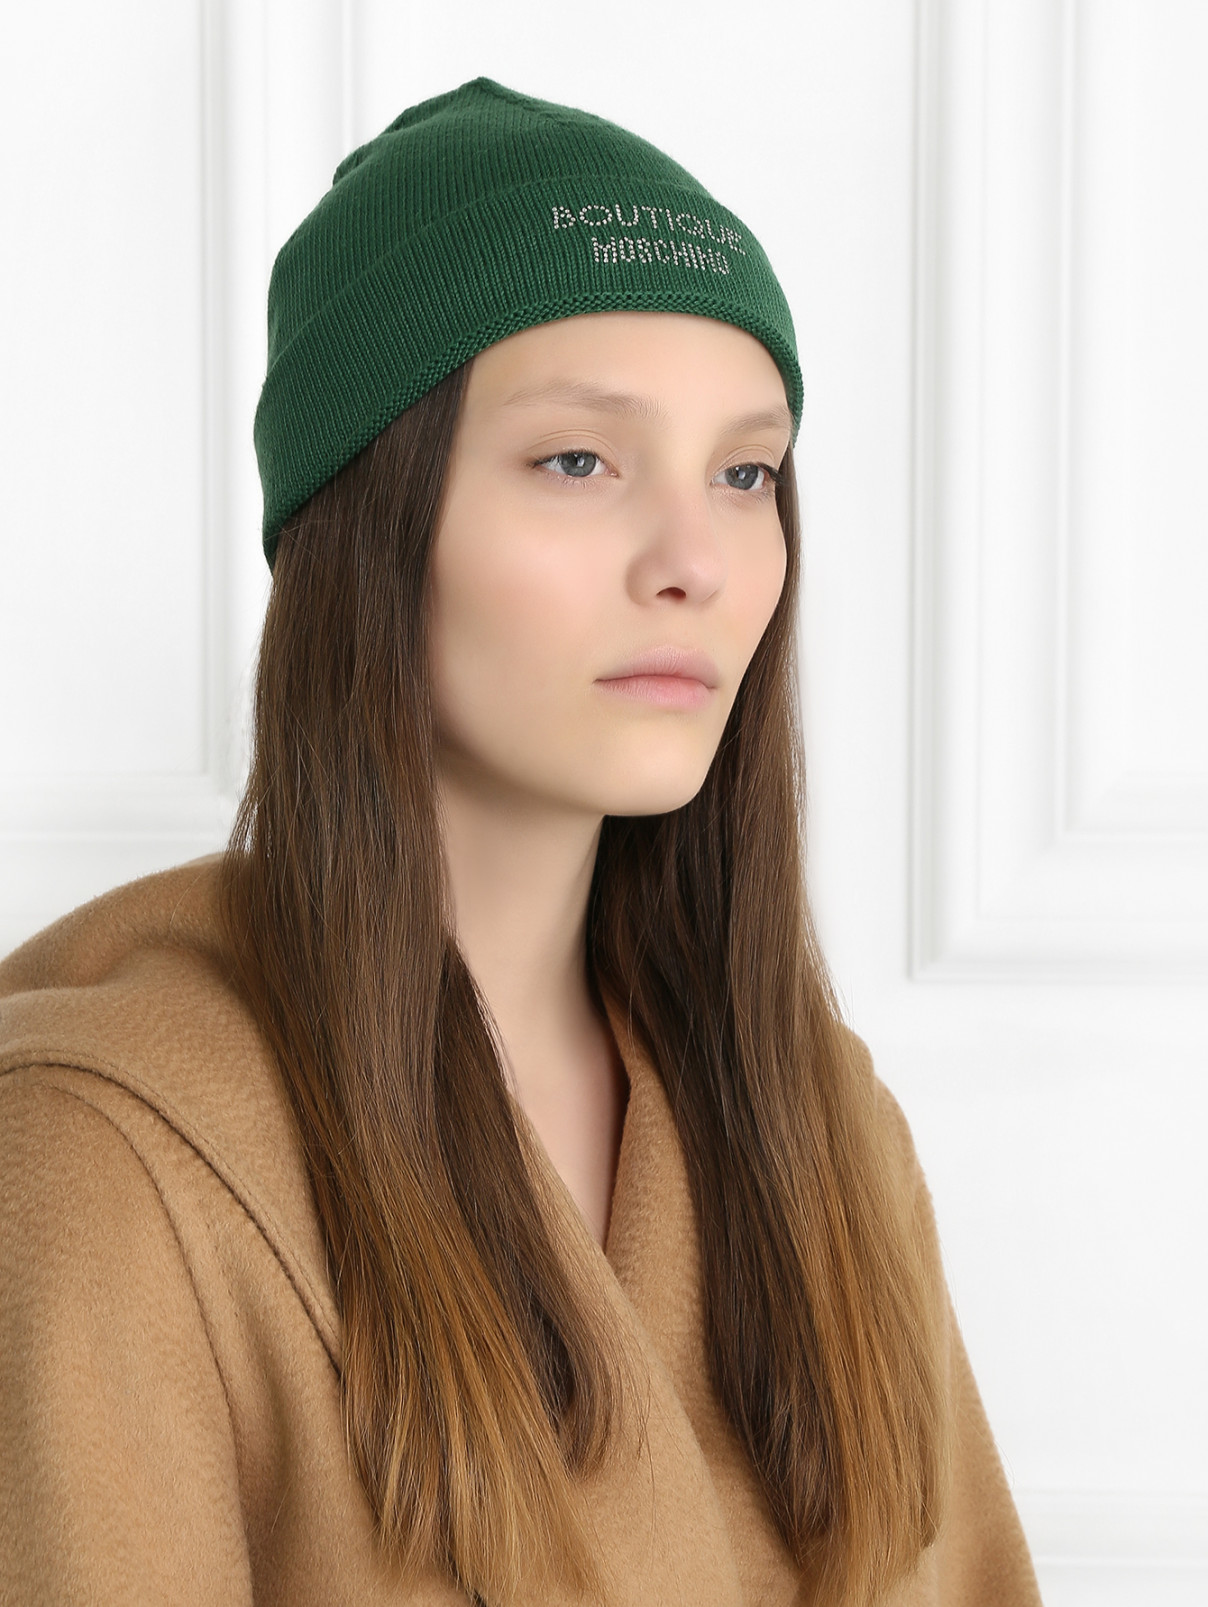 Шапка из шерсти Moschino Couture  –  Модель Общий вид  – Цвет:  Зеленый